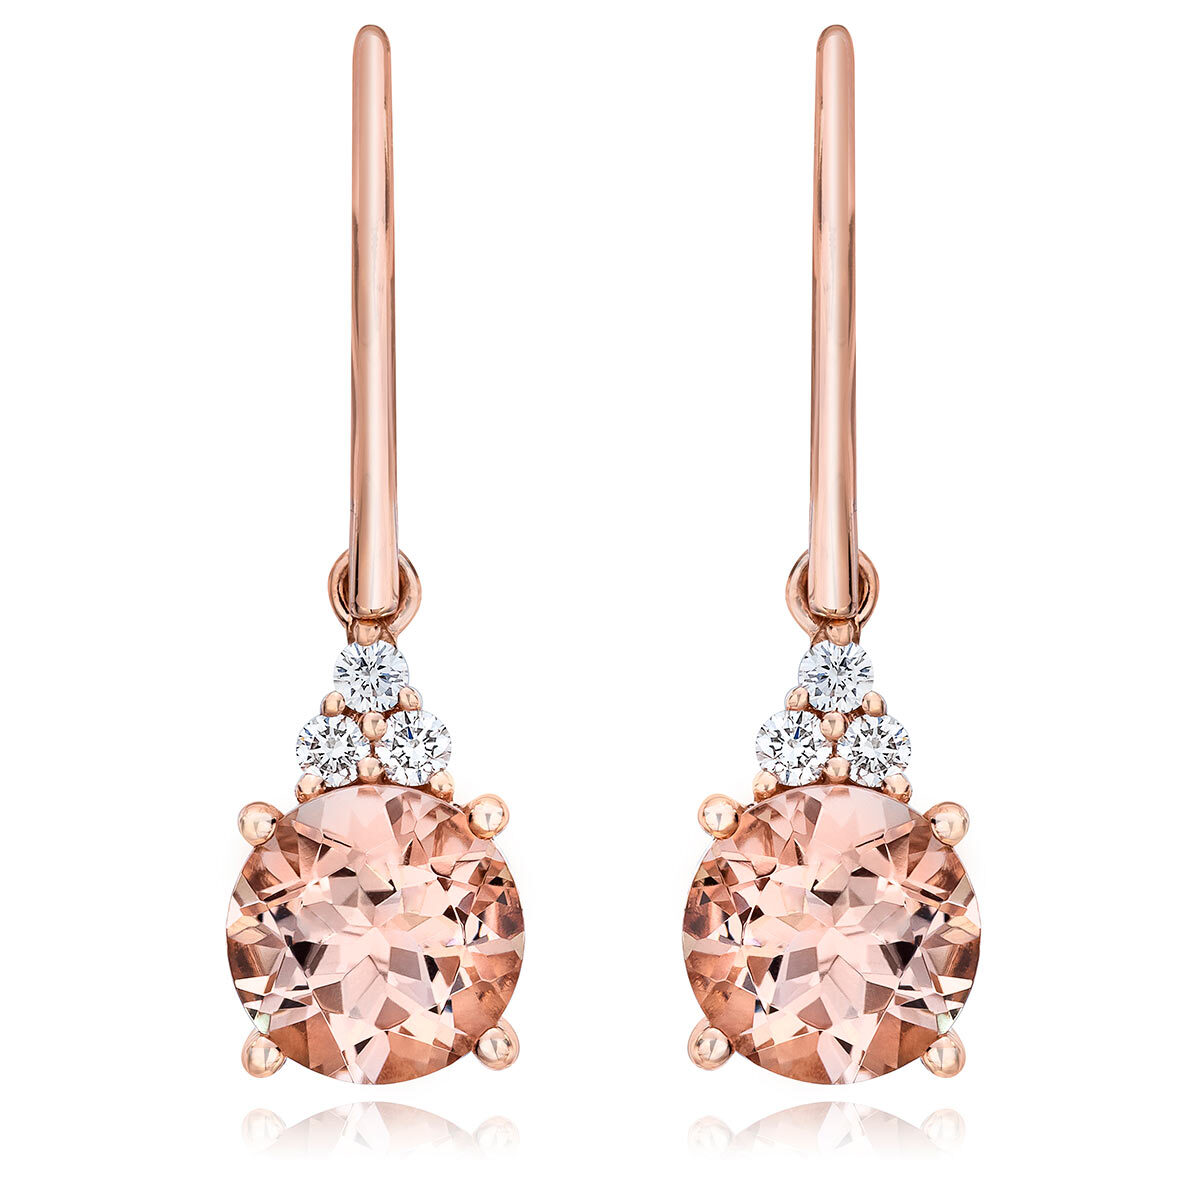 Morganite & 0.13ctw Diamond Earrings, 14k Rose Gold